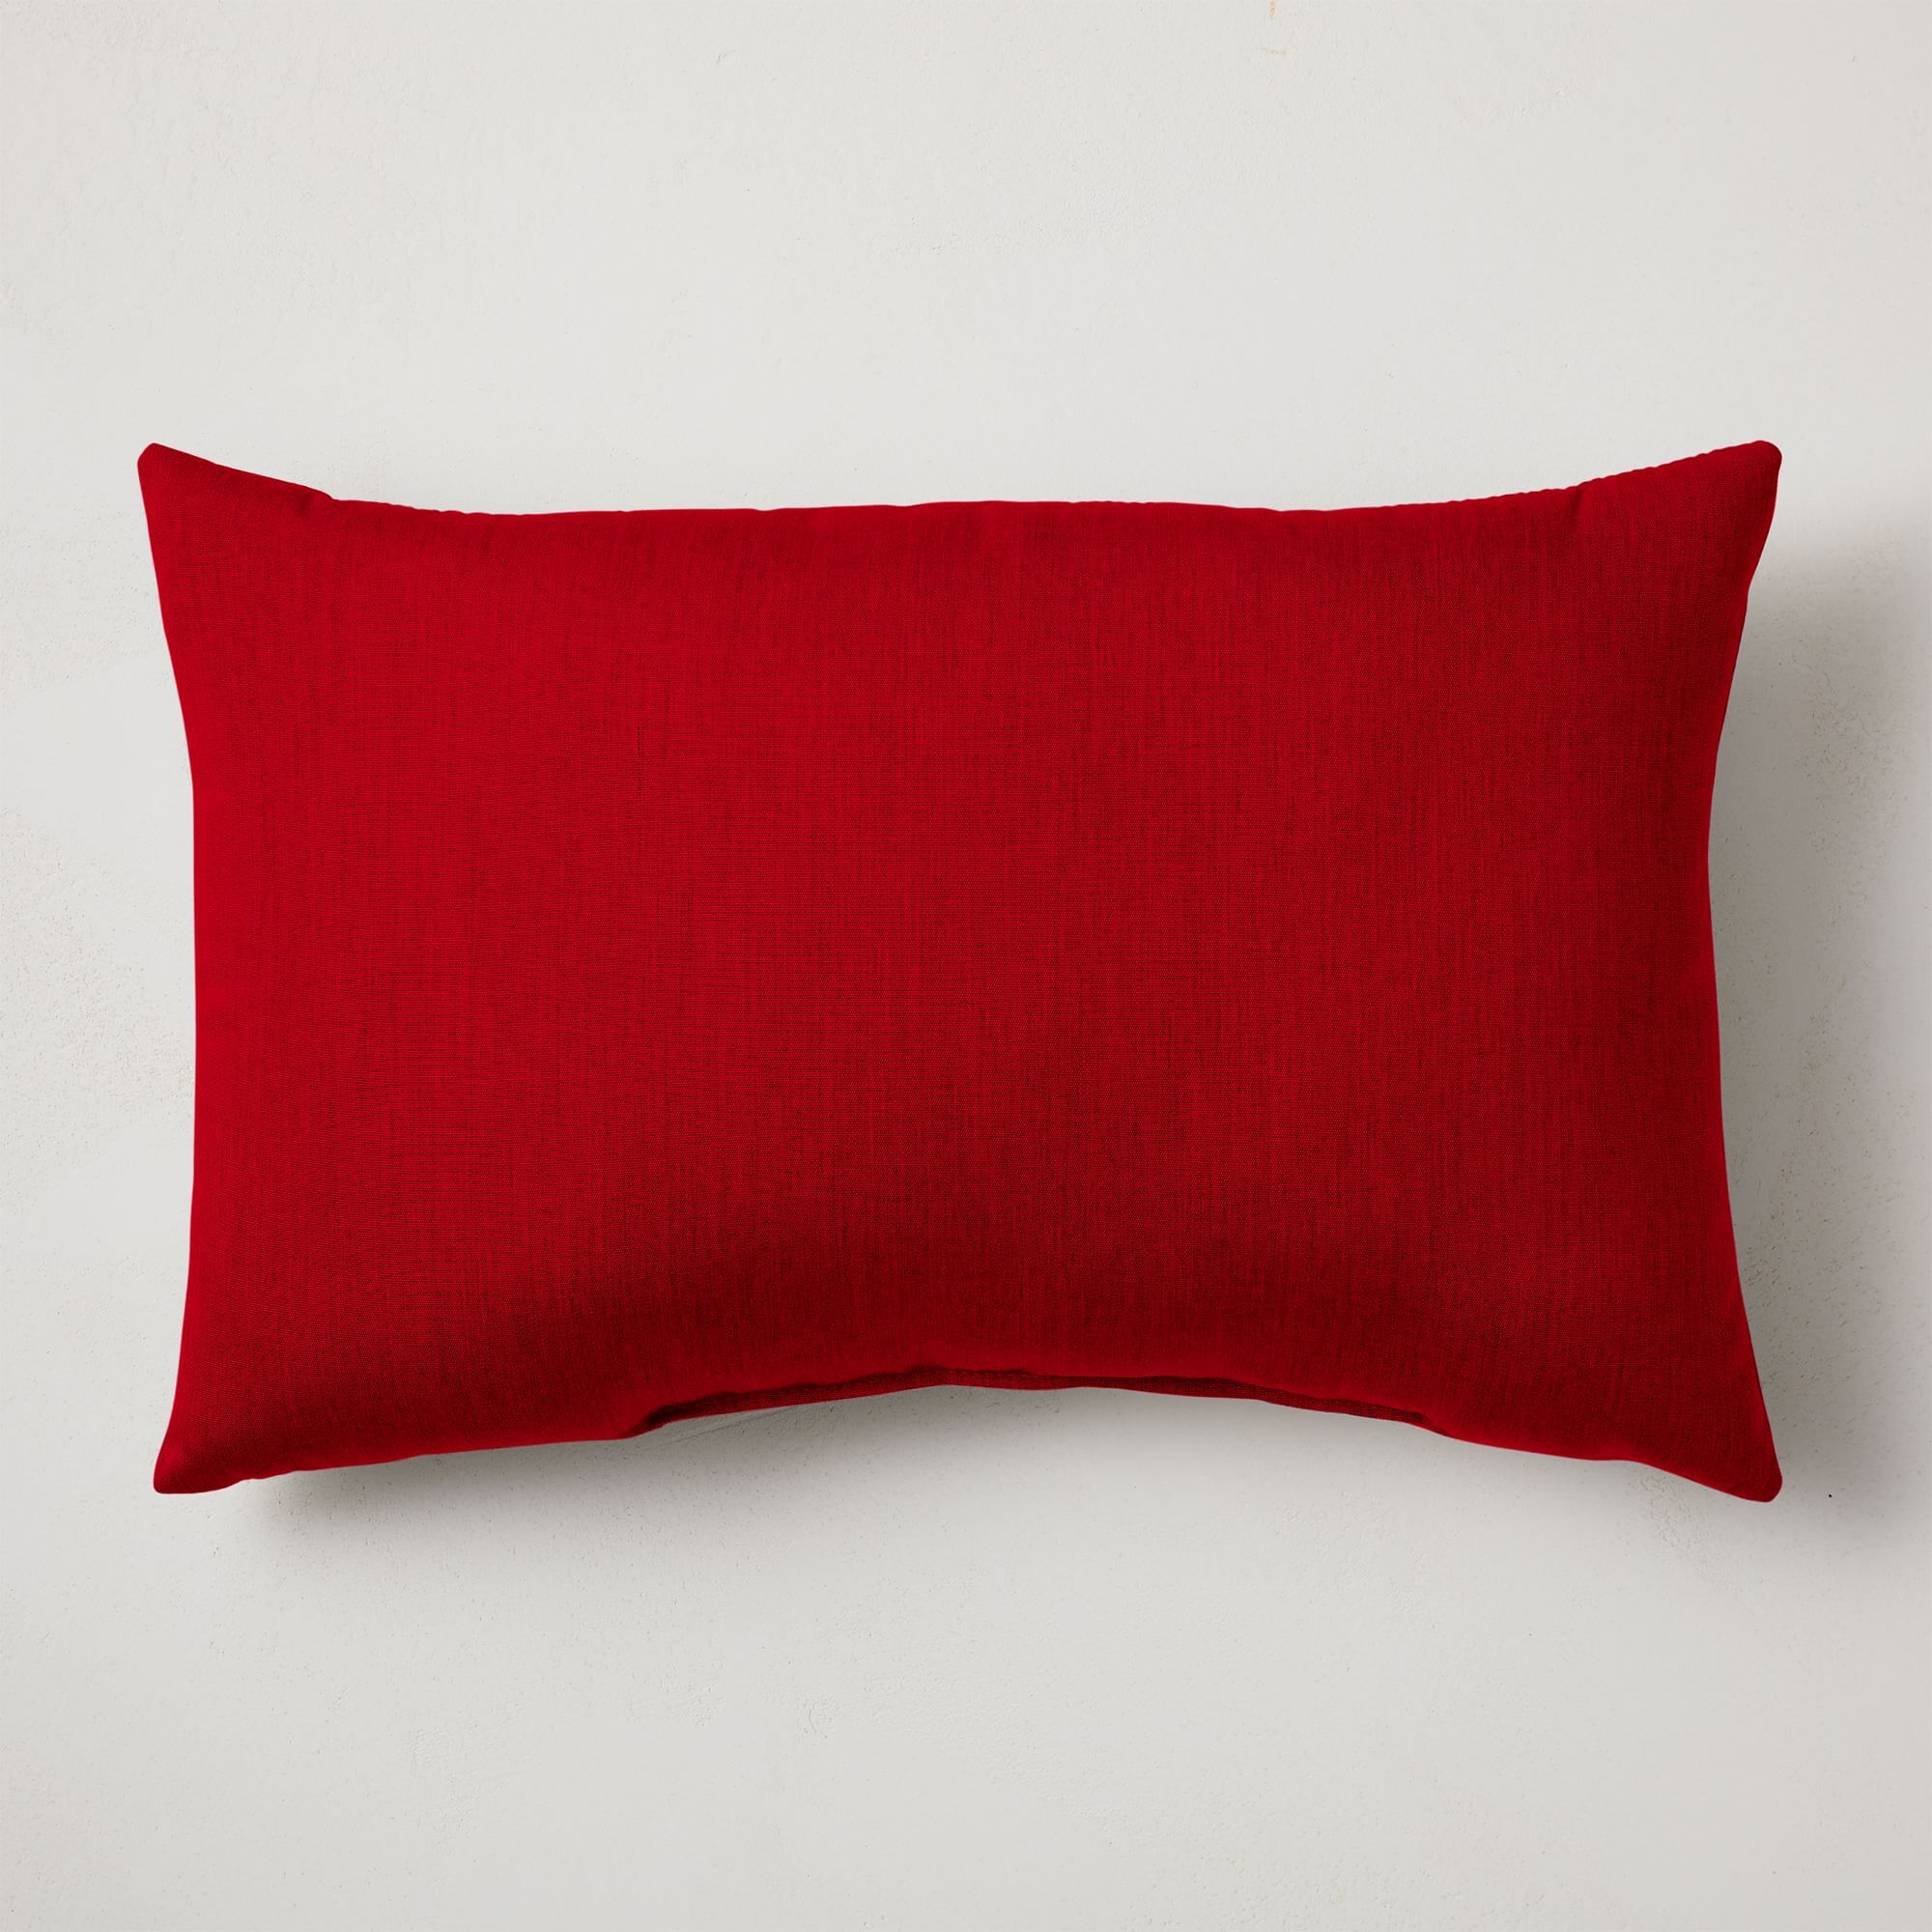 A red throw pillow 